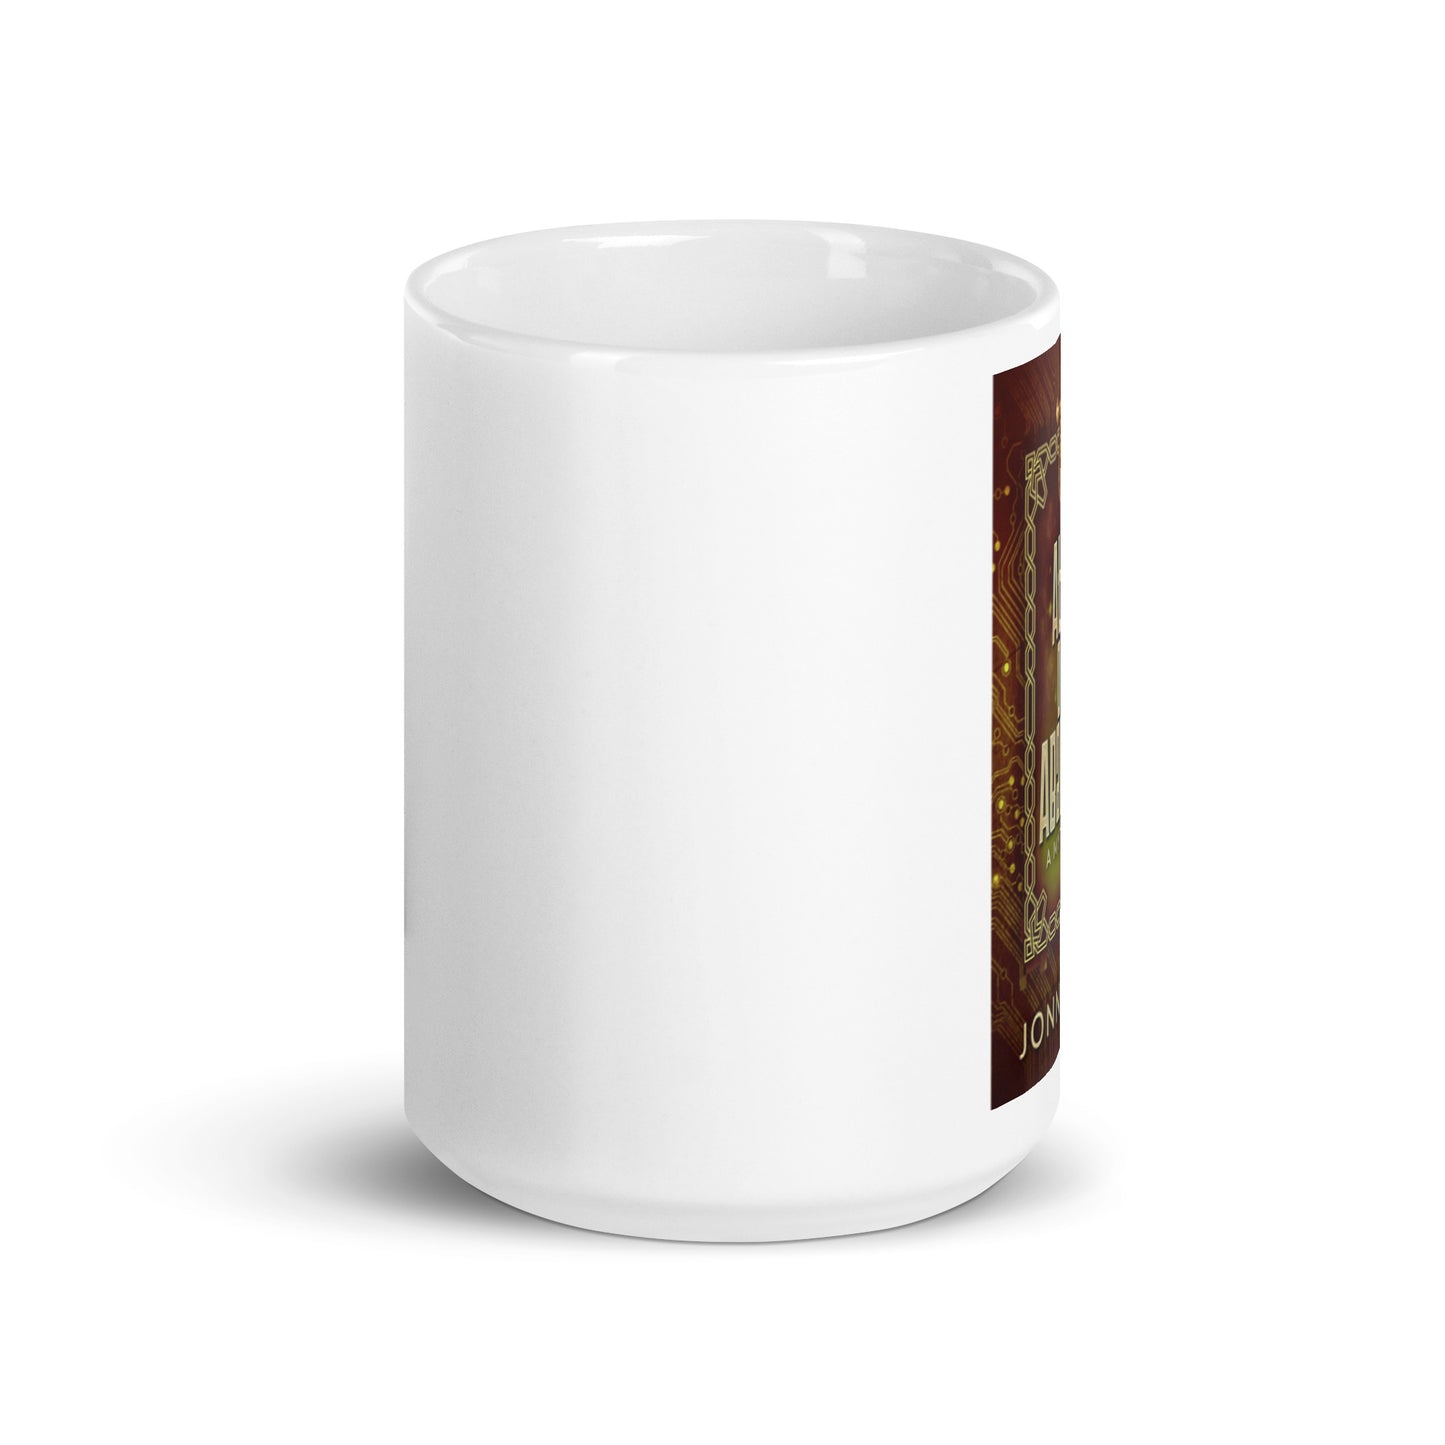 Athena - Of The Abandoned - White Coffee Mug